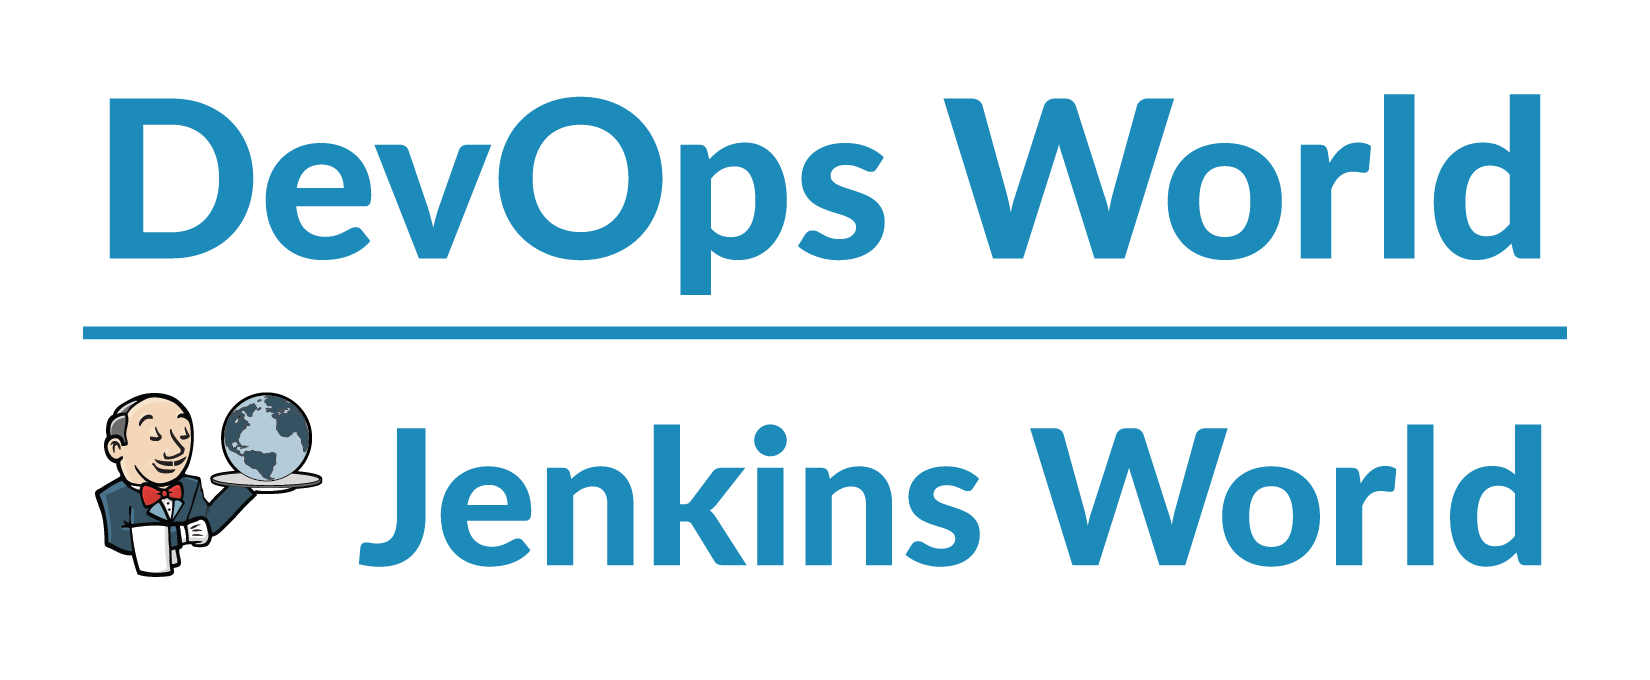 DevOps world Jenkins world logo blue large